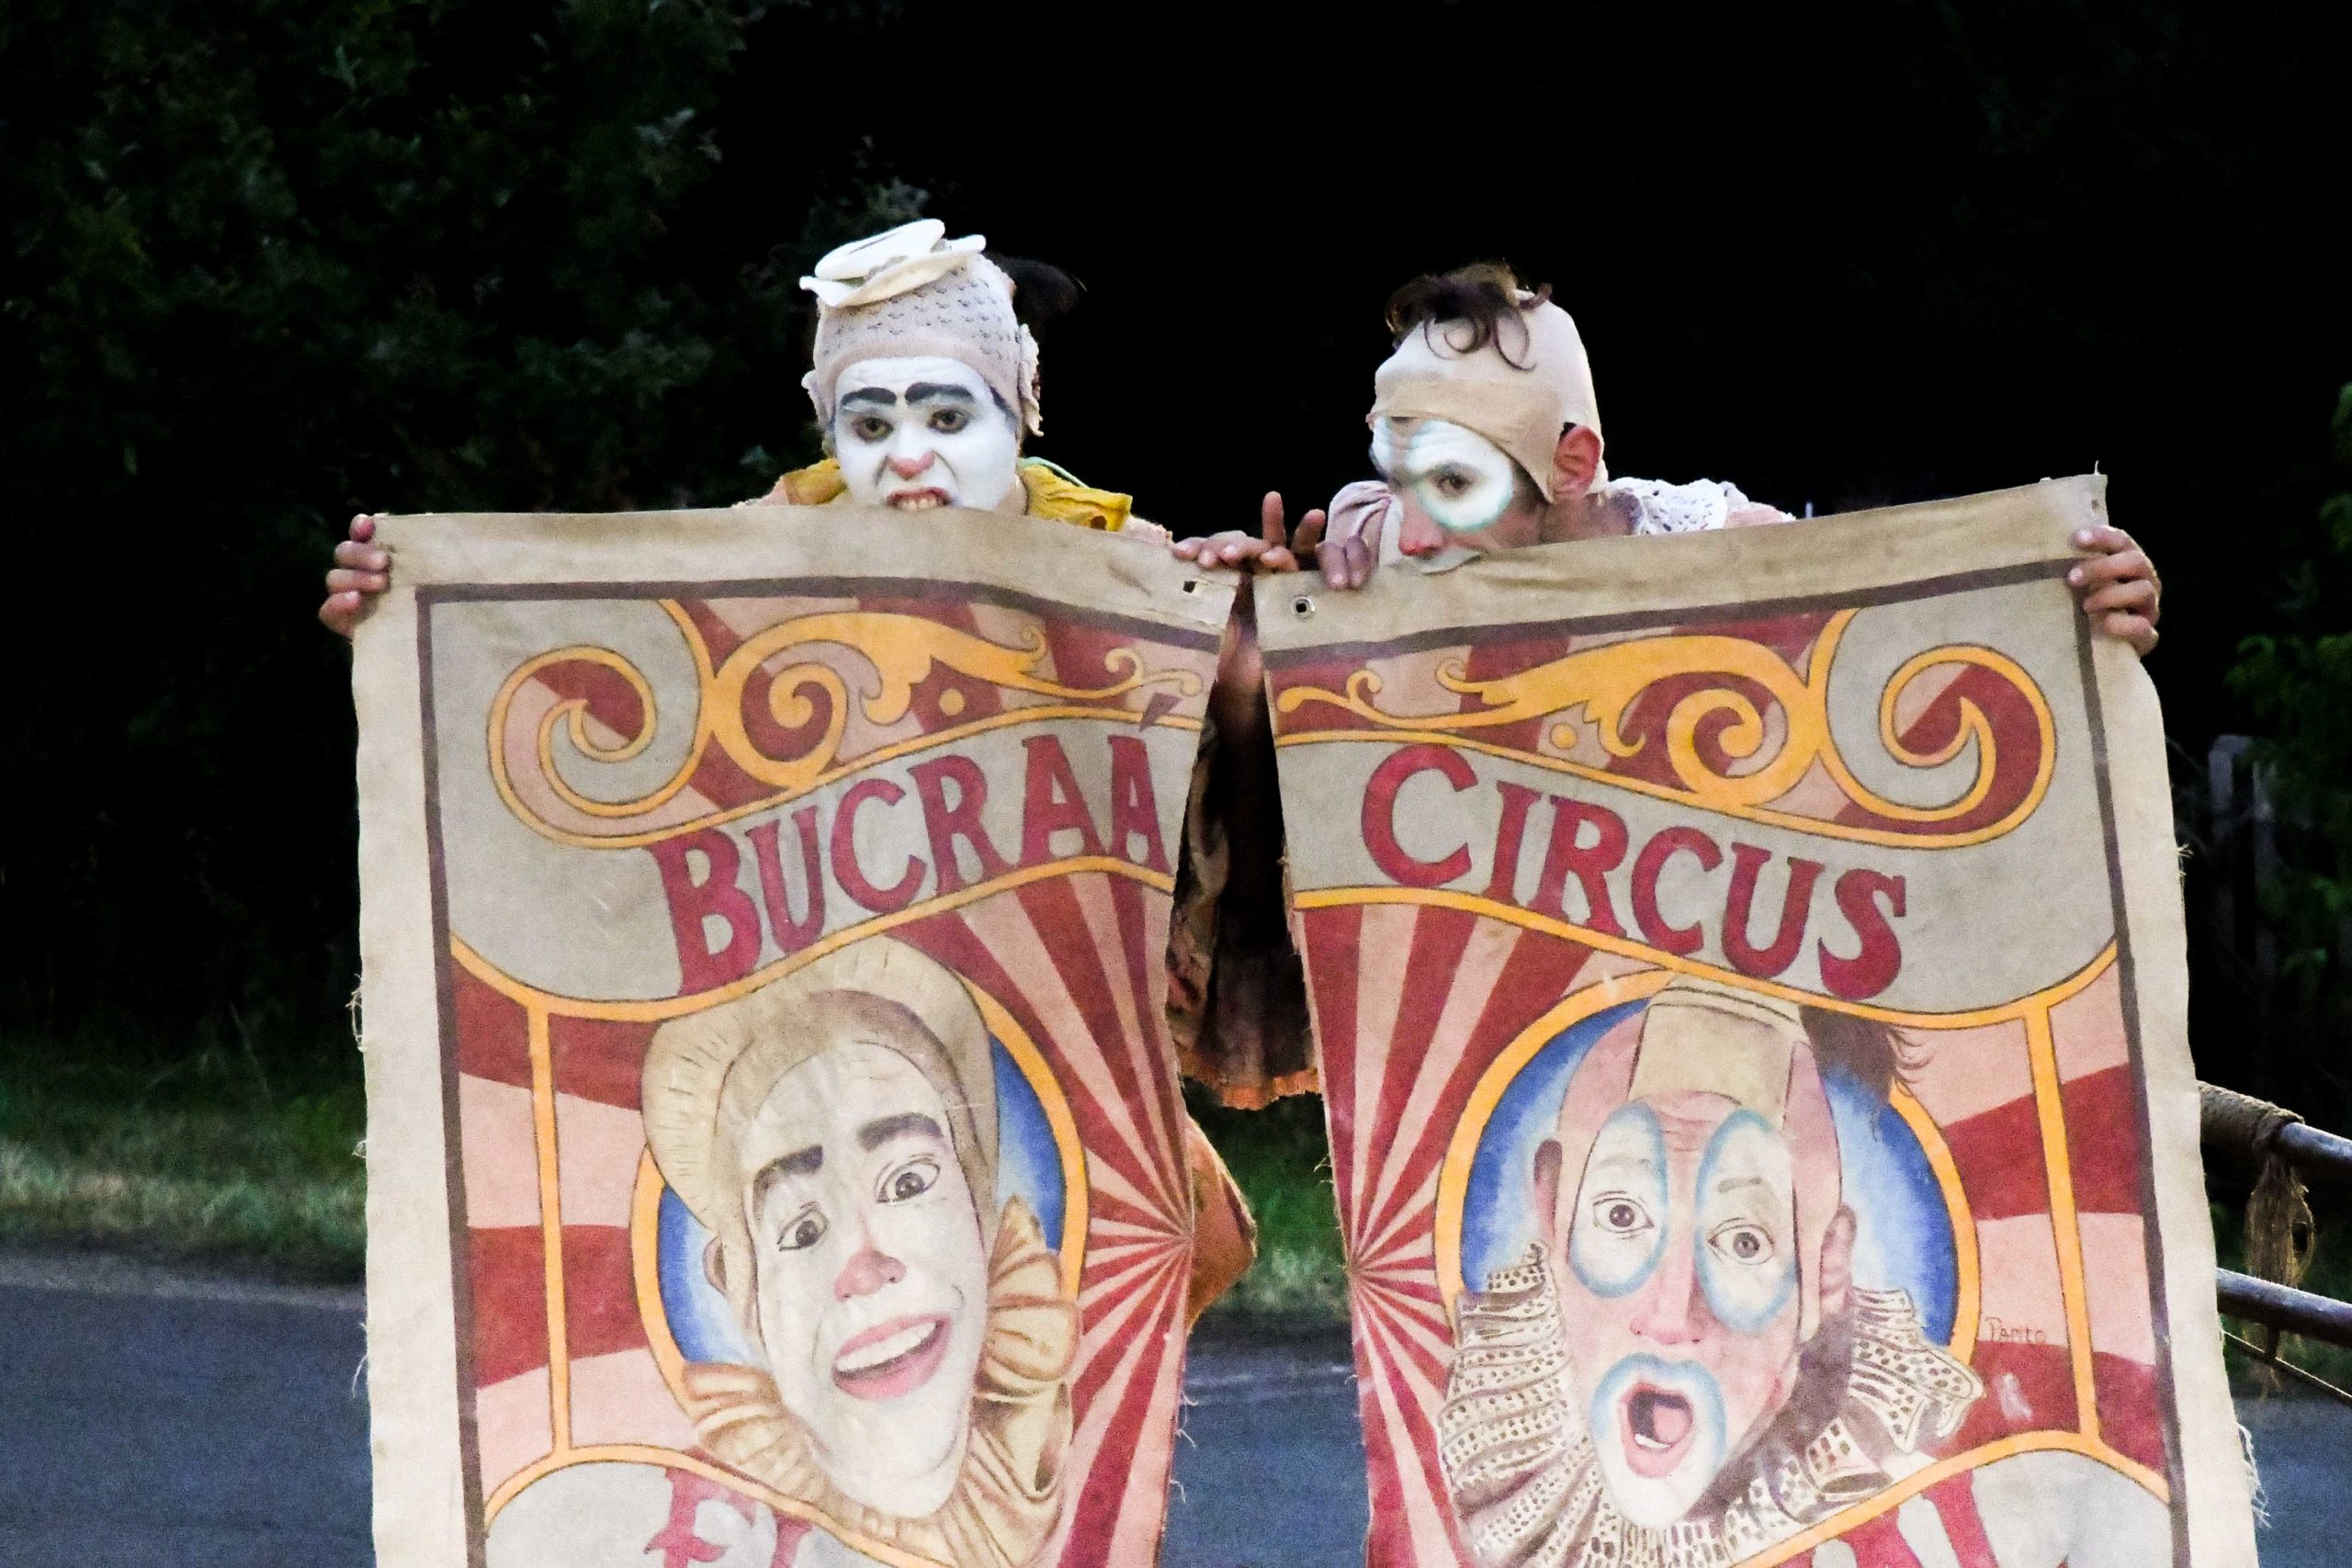 bucraa circus